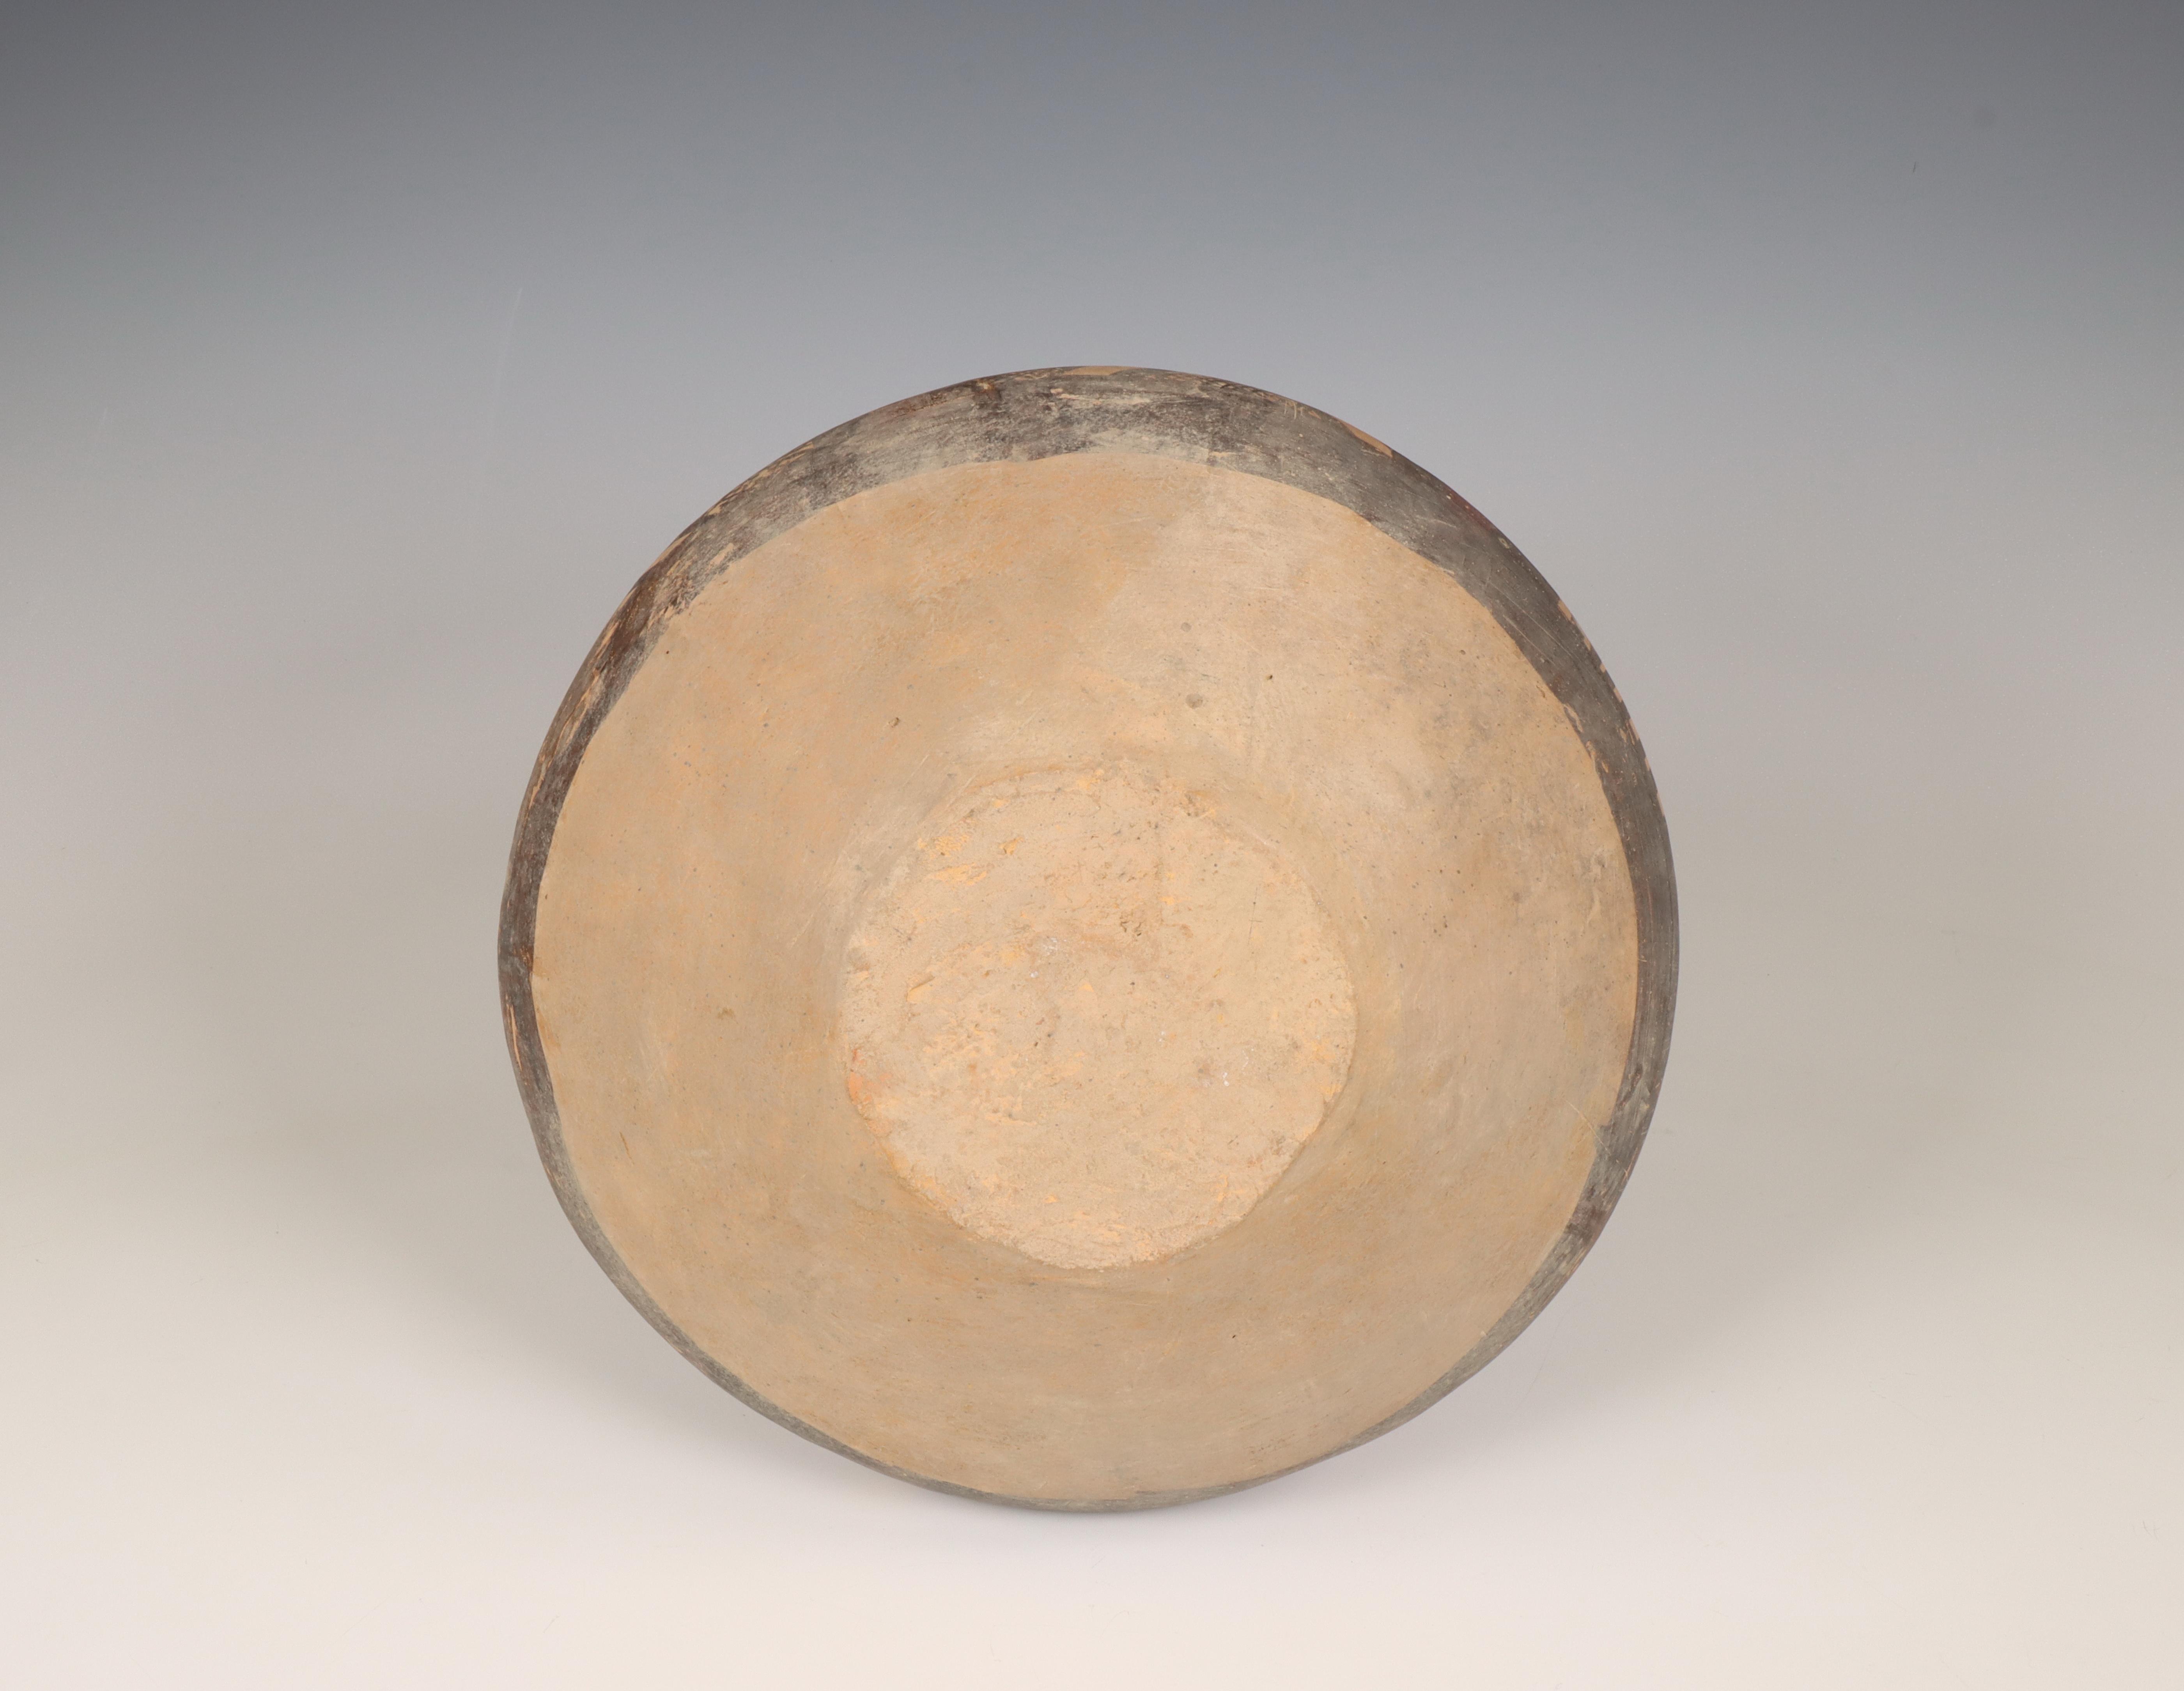 China, earthenware pot, Majiayao culture, Banshan phase, mid 3rd millennium BC, - Image 5 of 6